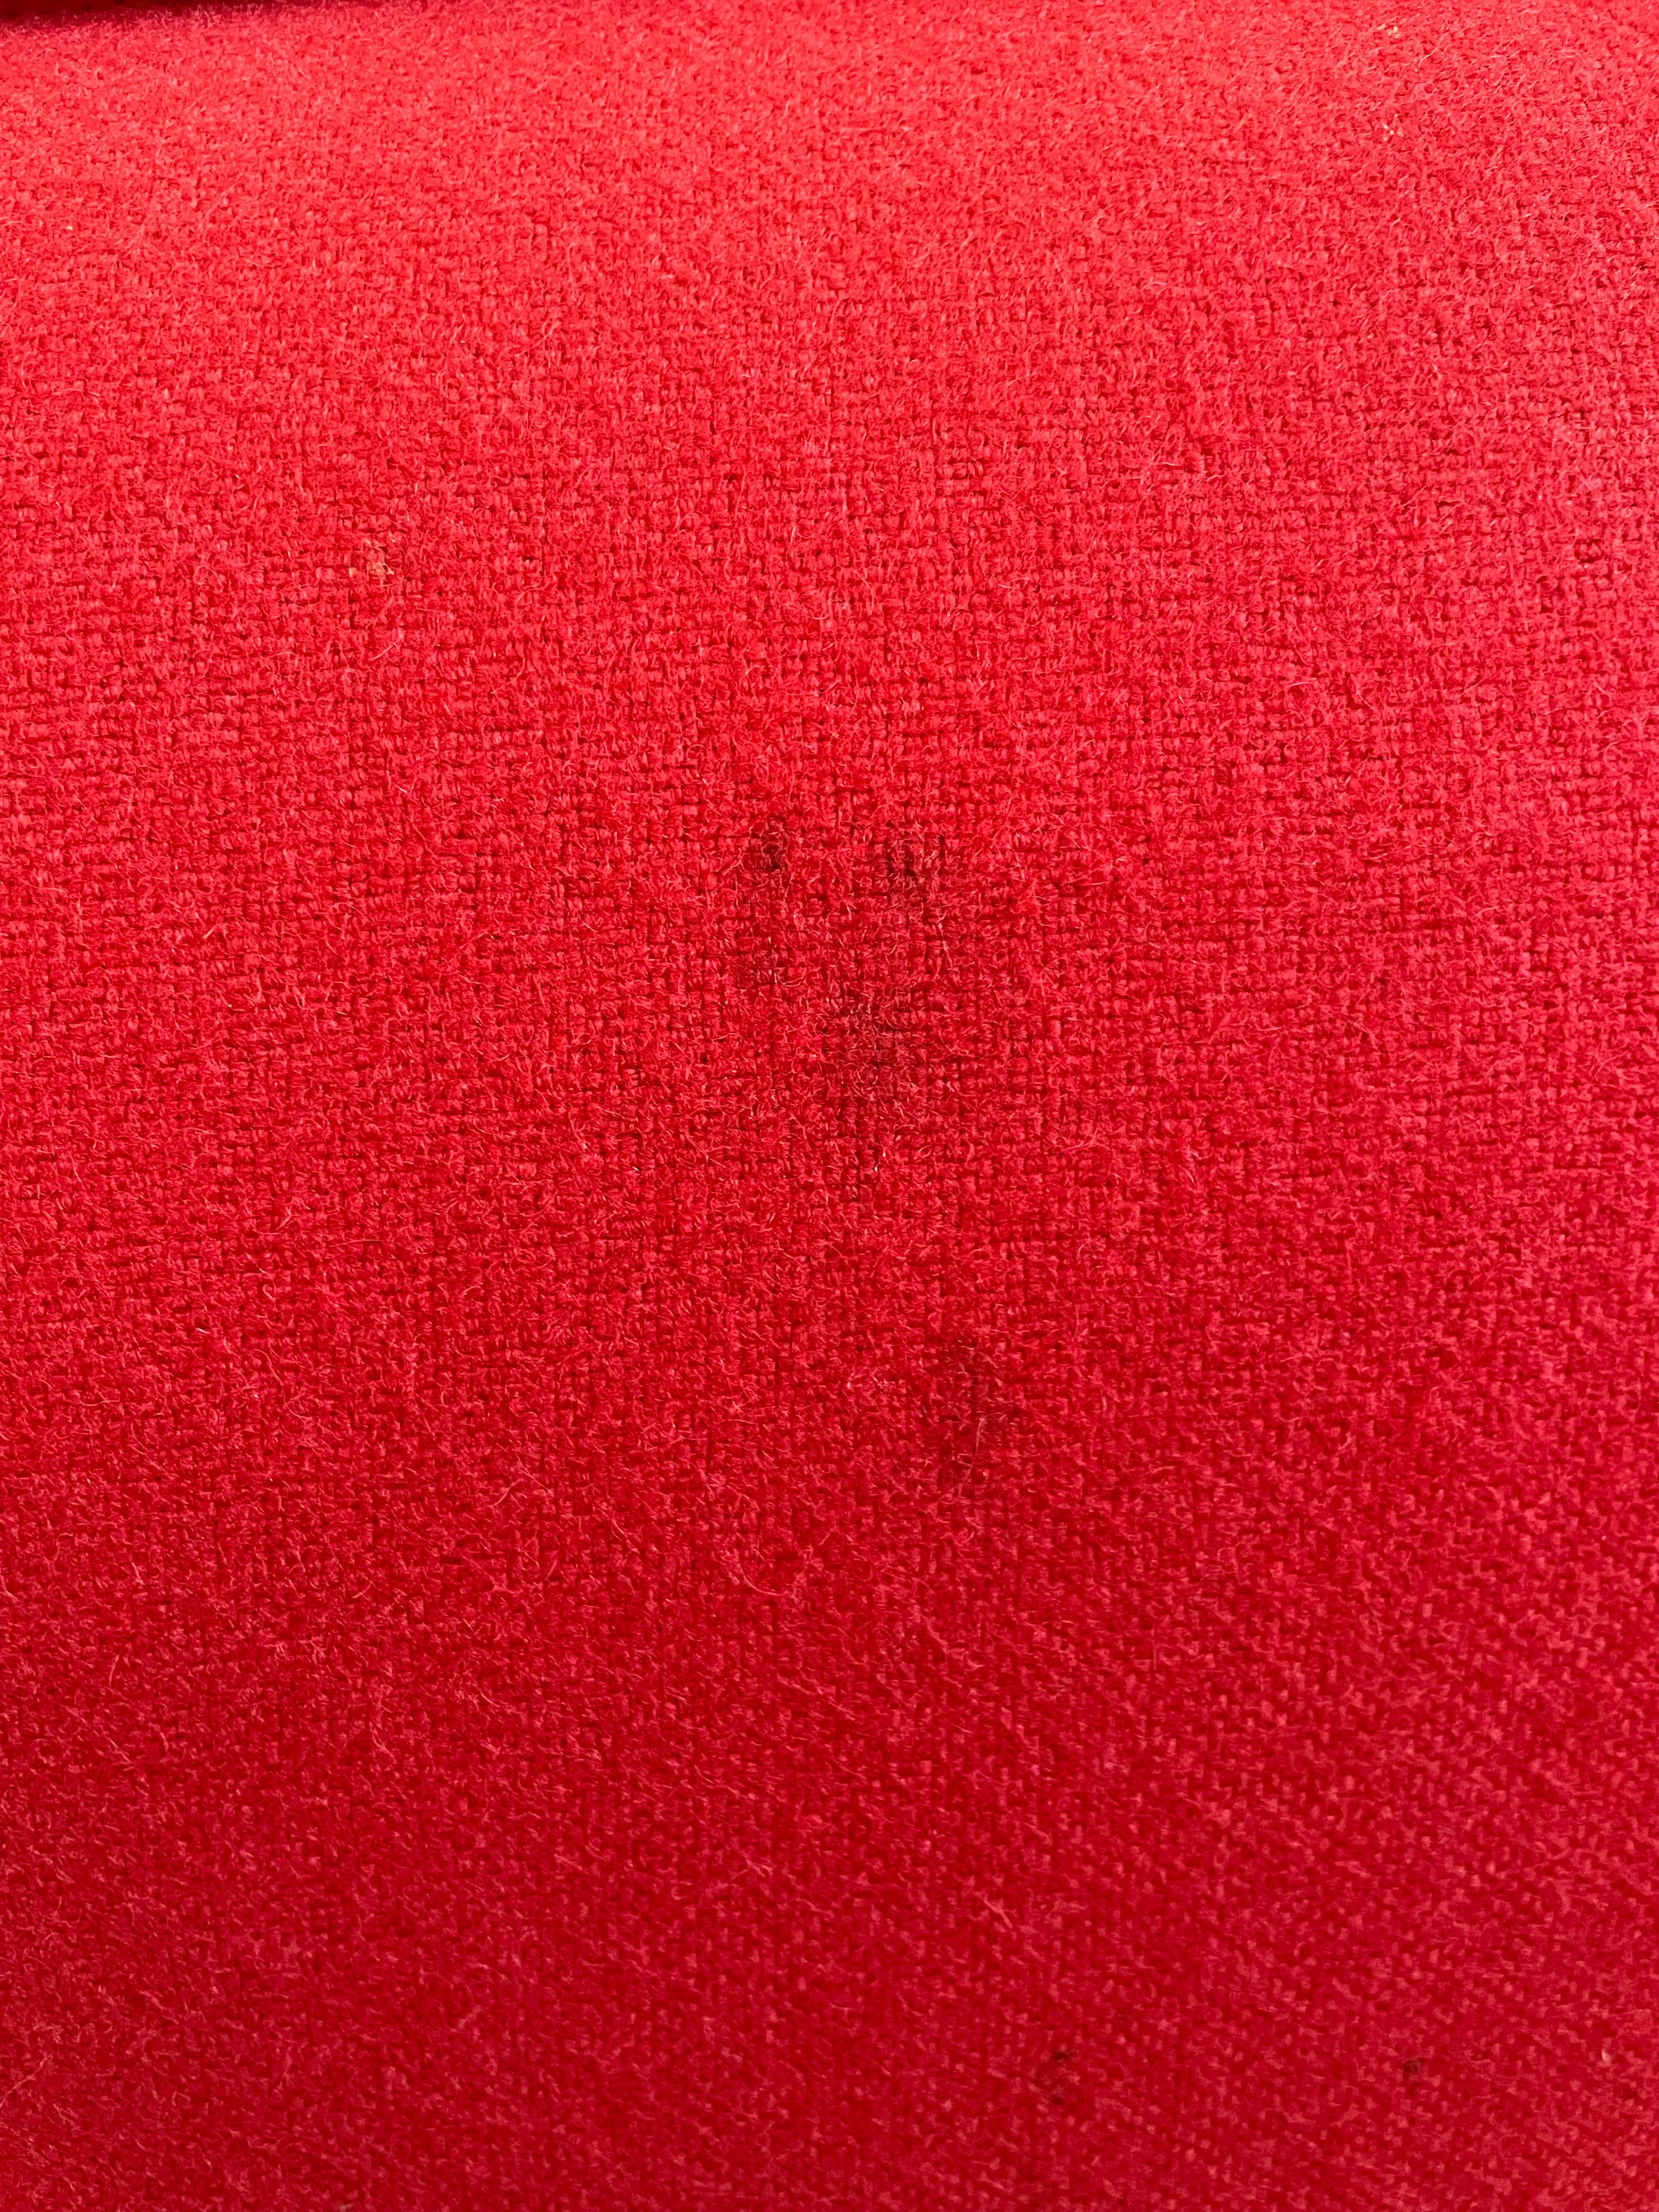 XXIe siècle et contemporain Mario Bellini Le Bambole '07 Sofa B&B Italia in Red Wool, Removable Cover (Canapé Le Bambole '07 B&B Italia en laine rouge, couverture amovible) en vente